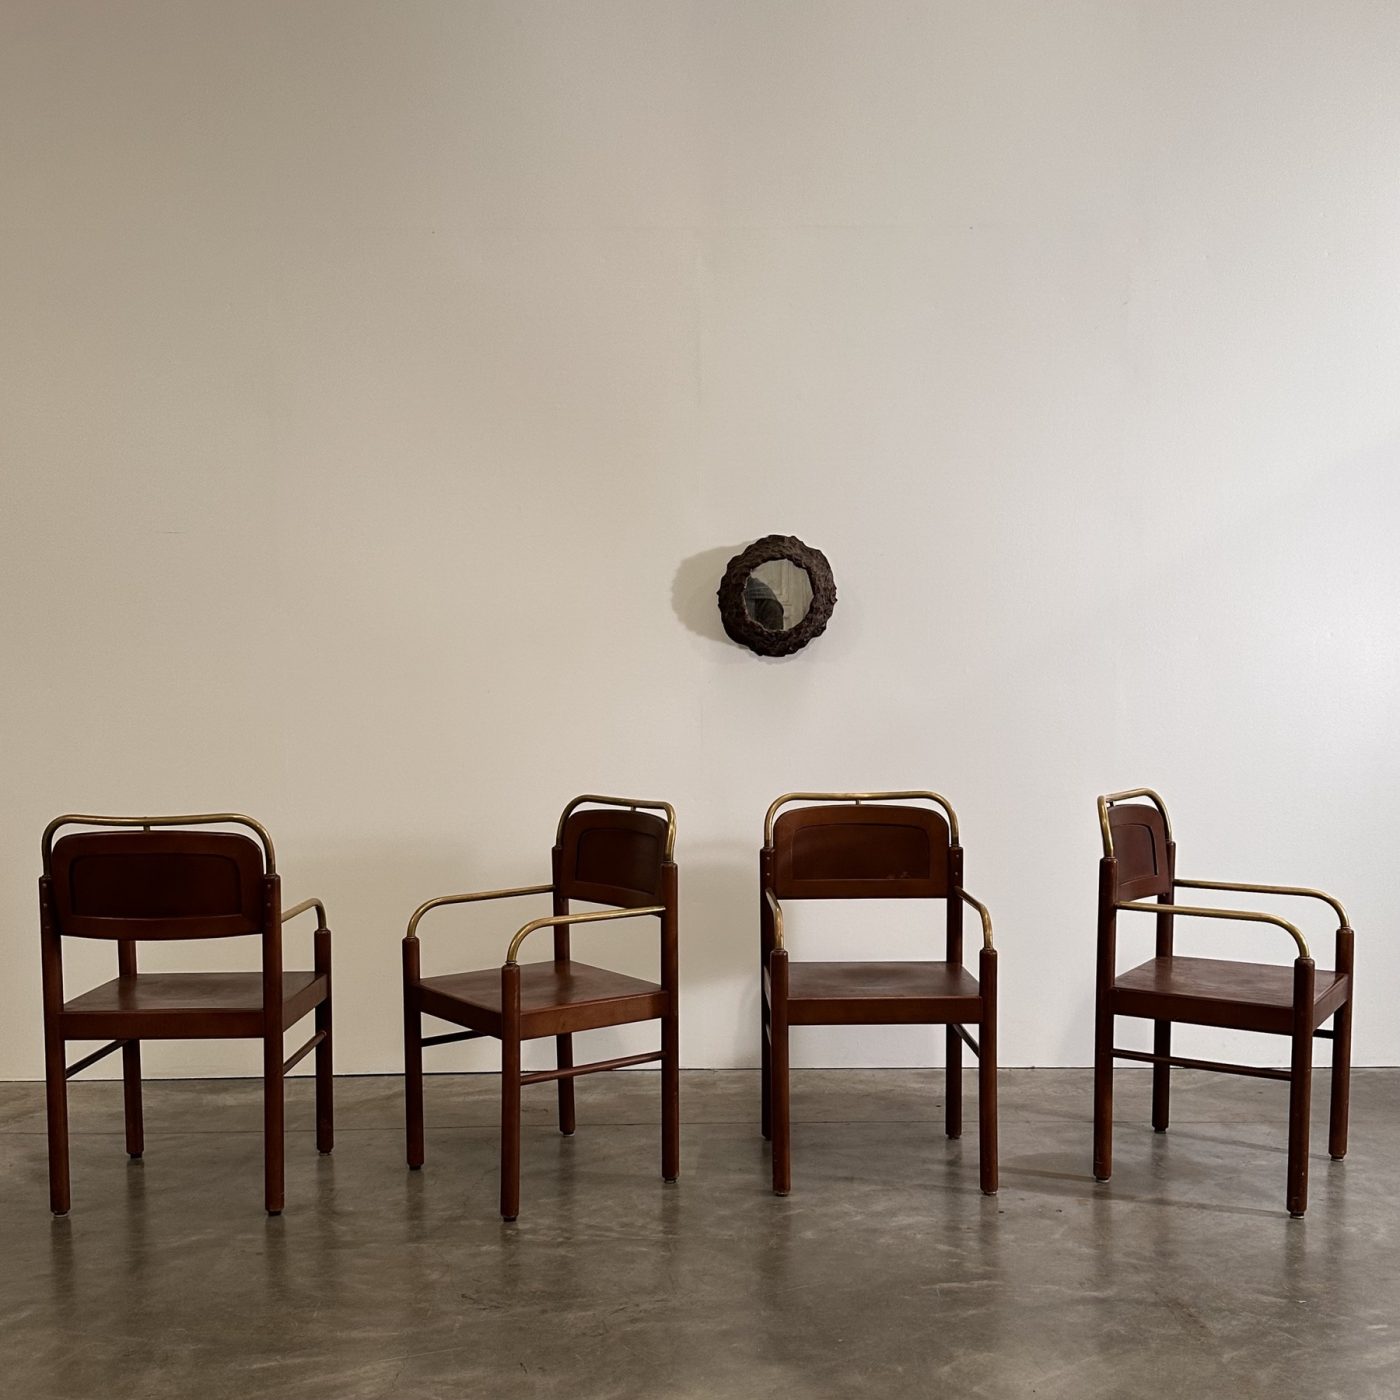 objet-vagabond-bistrot-armchairs0006